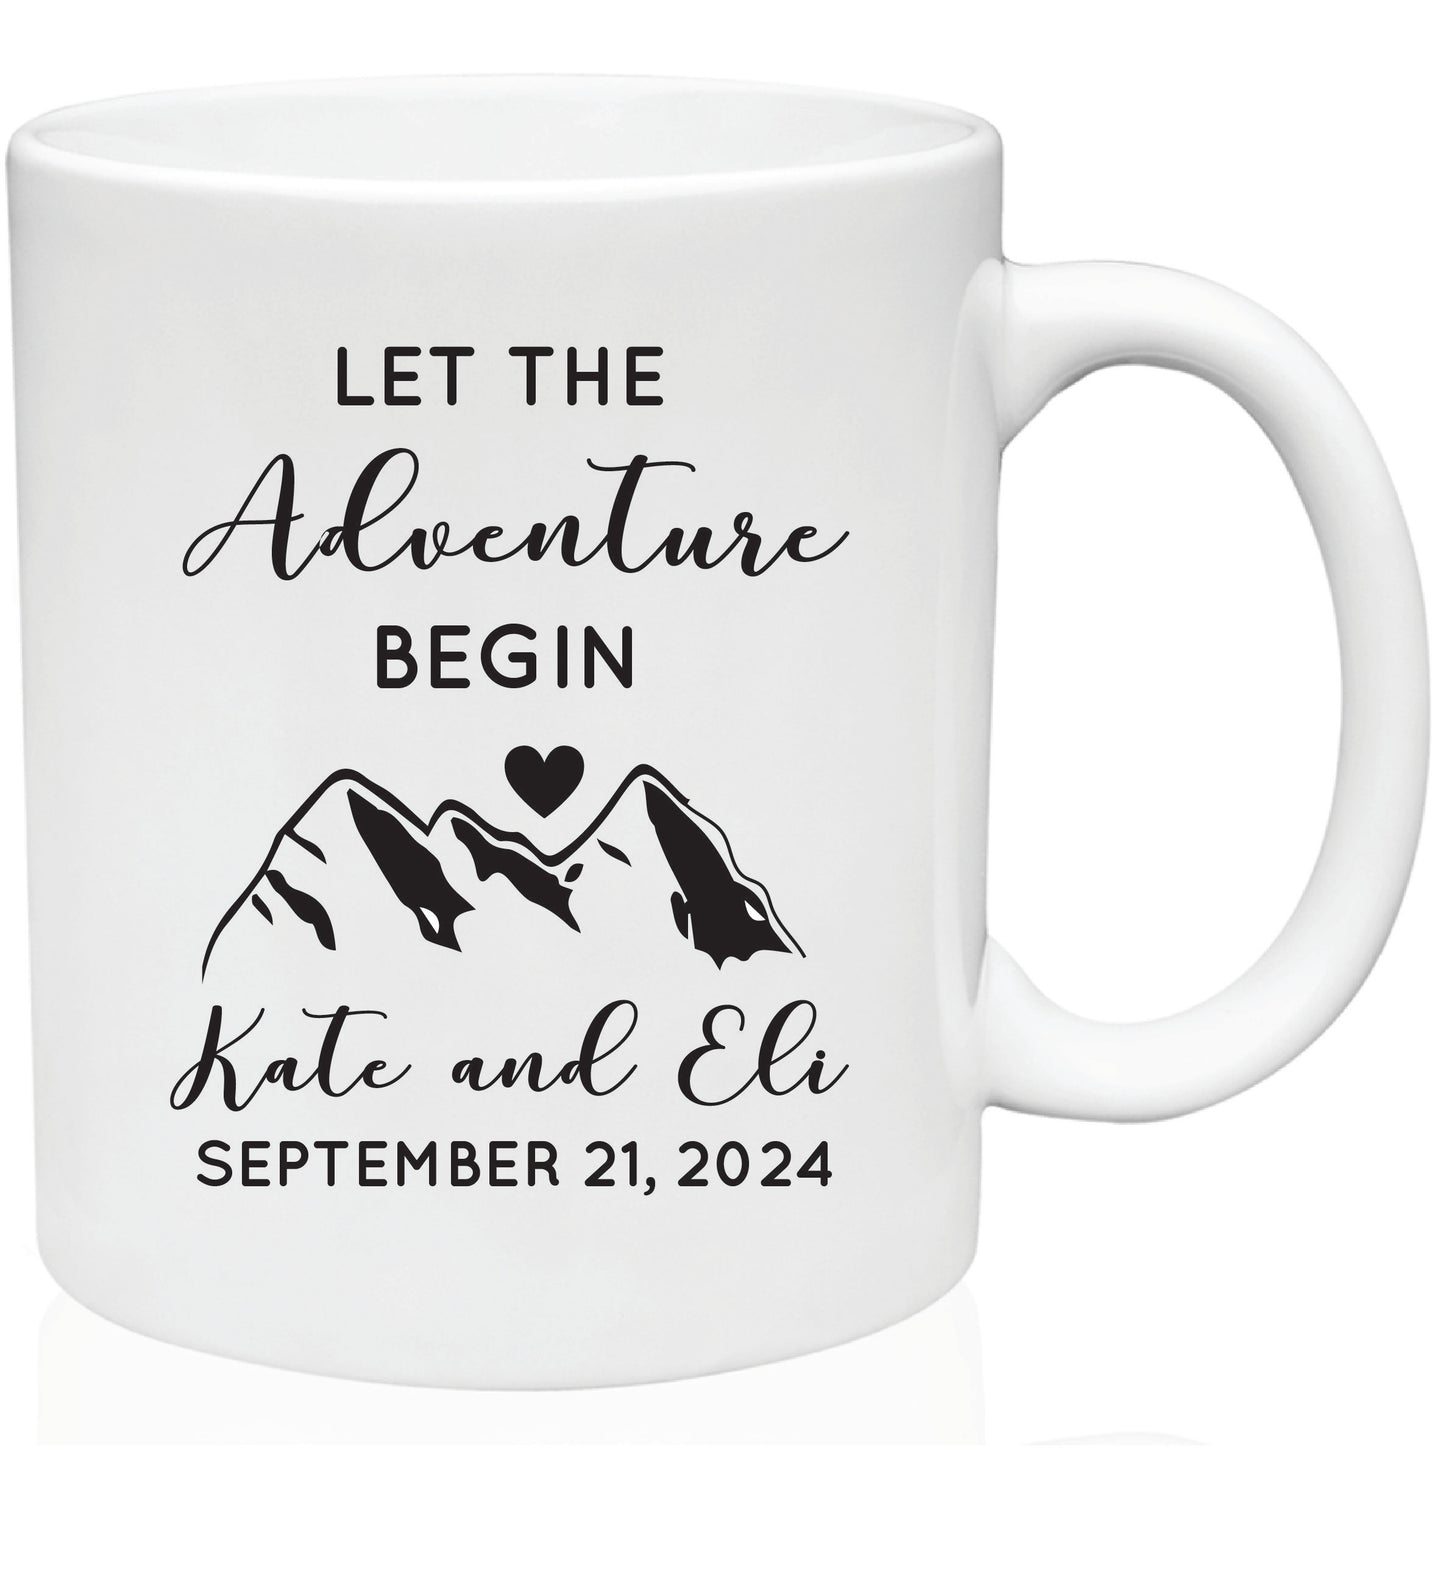 Let the adventure begin wedding mugs